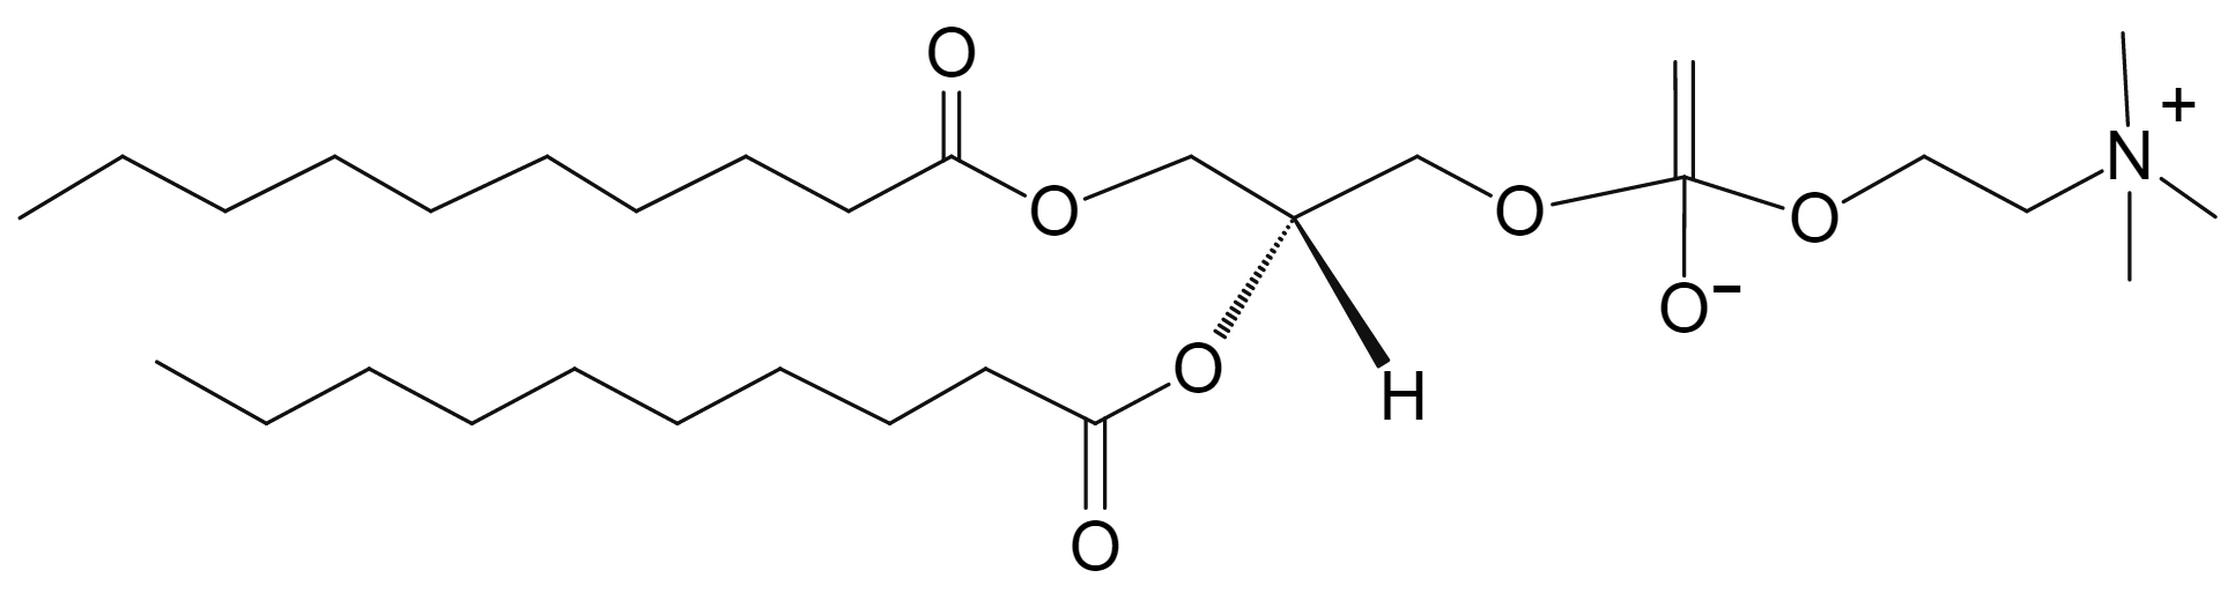 1,2-Didecanoyl-sn-glycero-3-phosphocholine